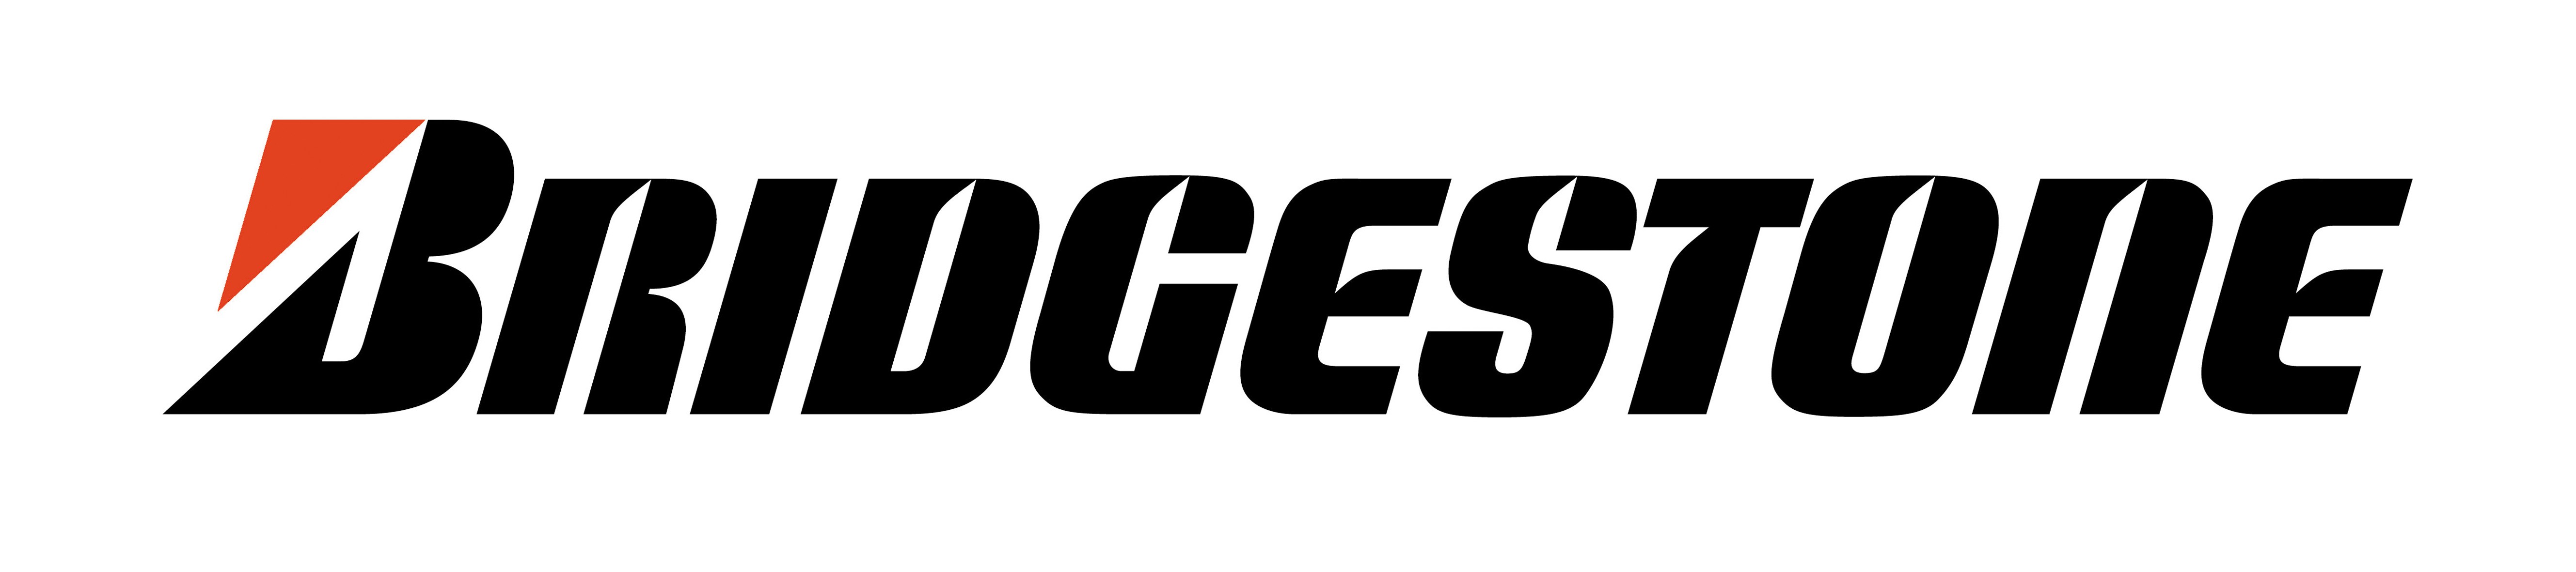 Bridgestone Logo Brands For HD 3d